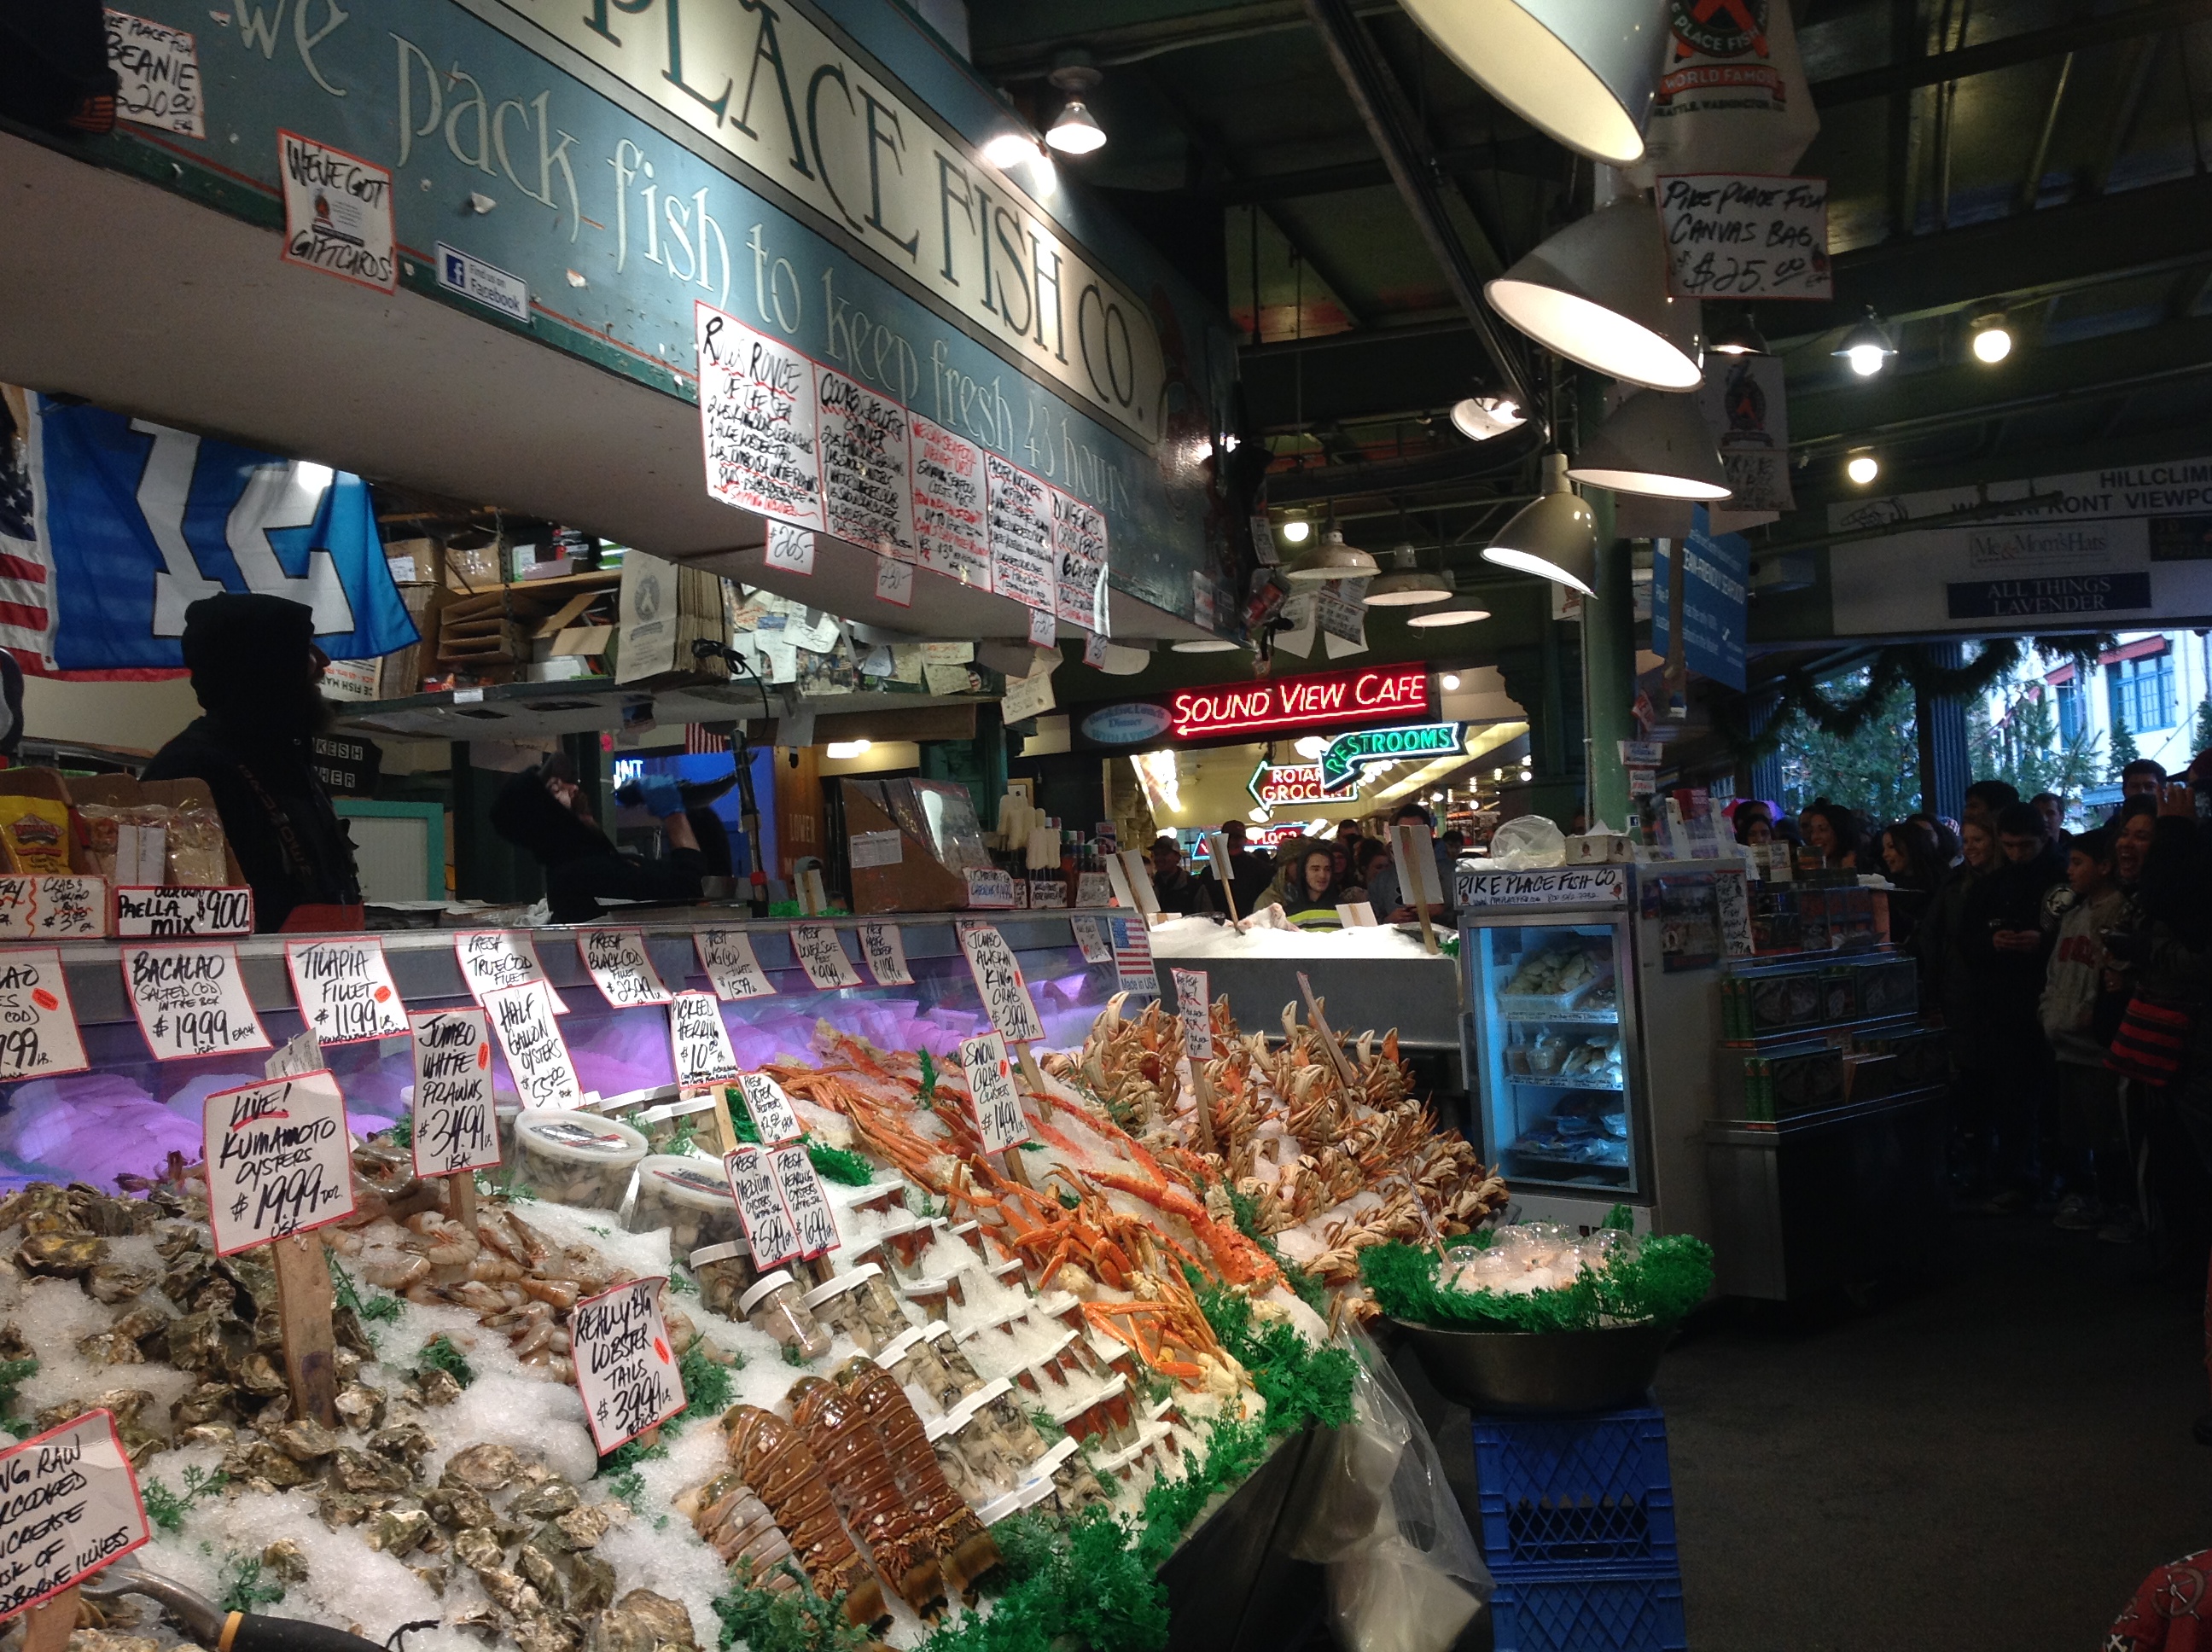 Pike Place market!